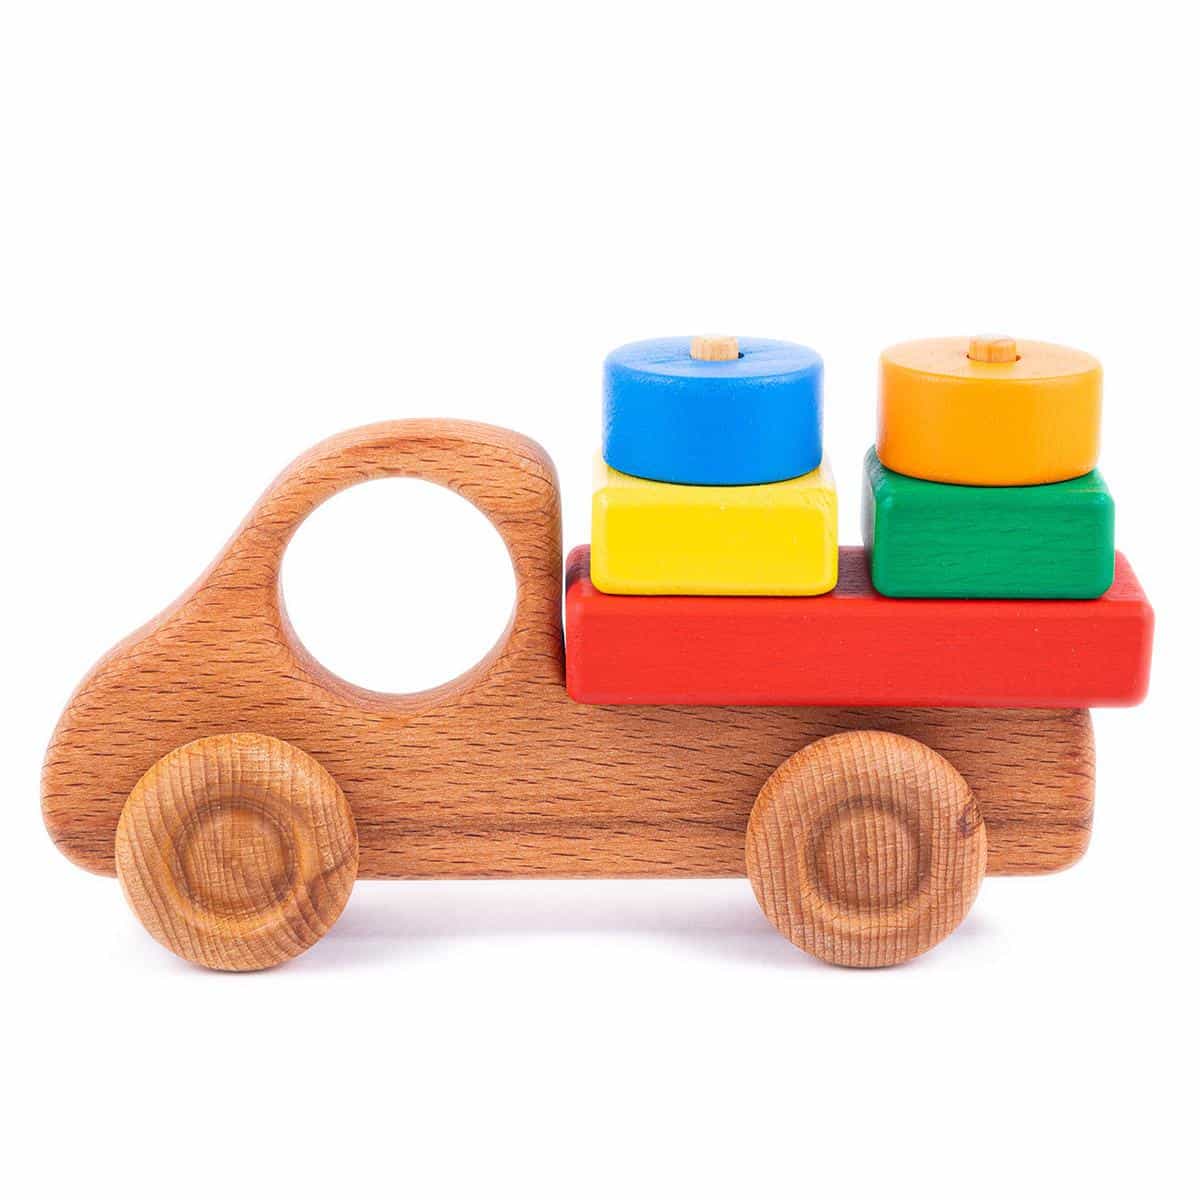 Spielzeug-LKW aus Holz